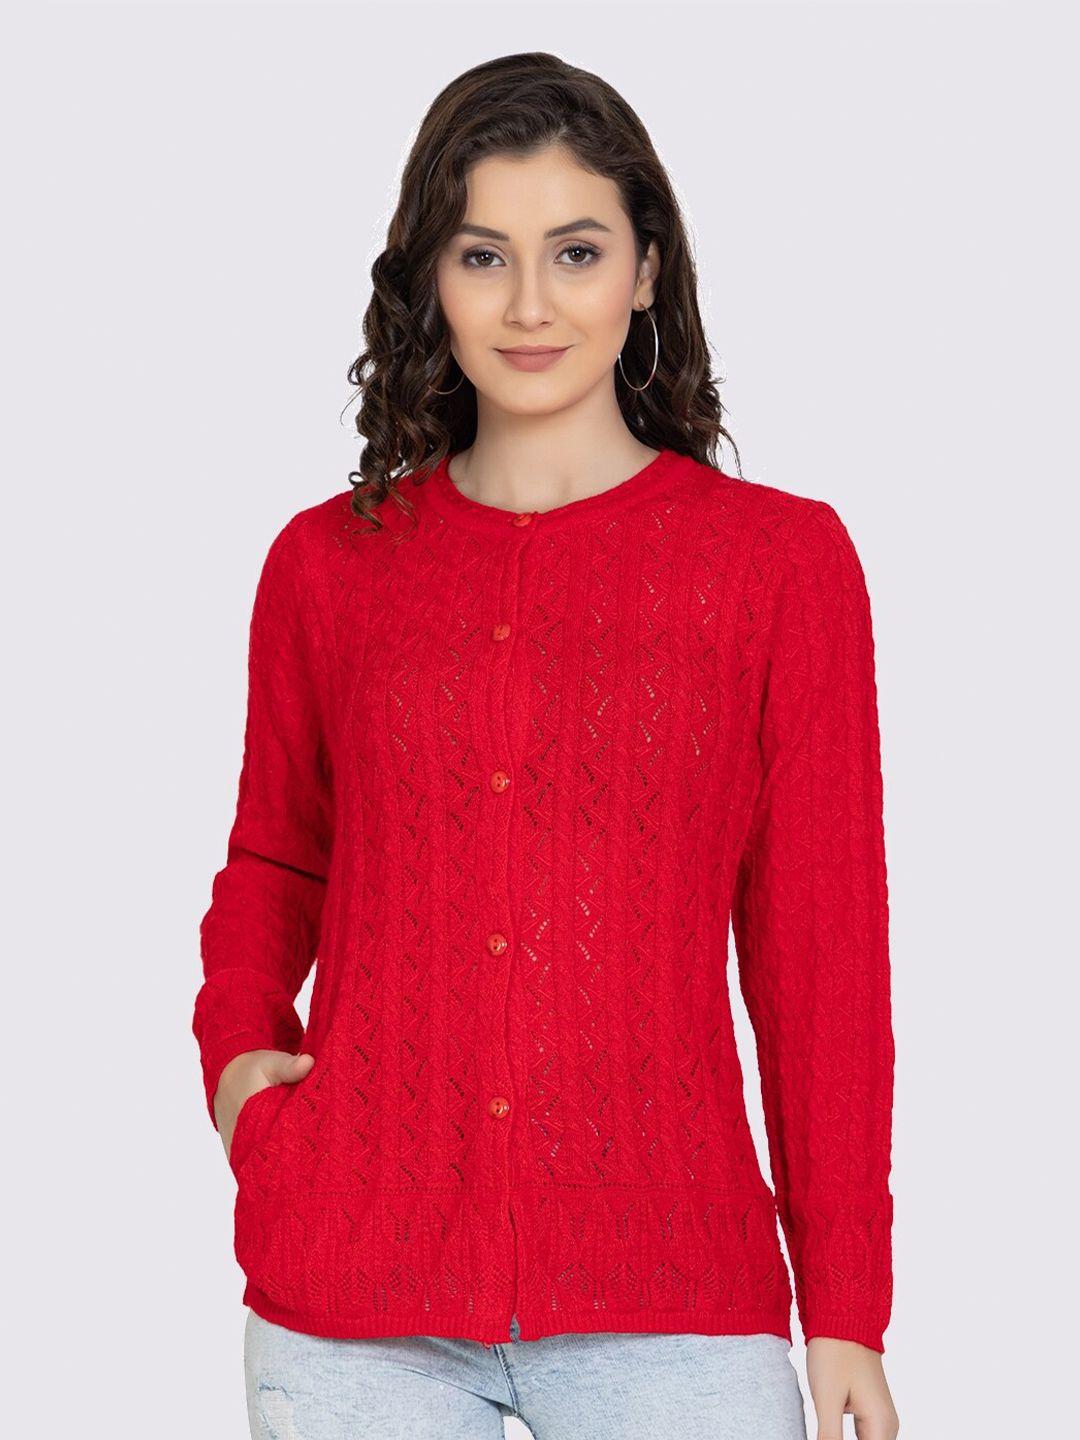 godfrey women red cardigan sweaters